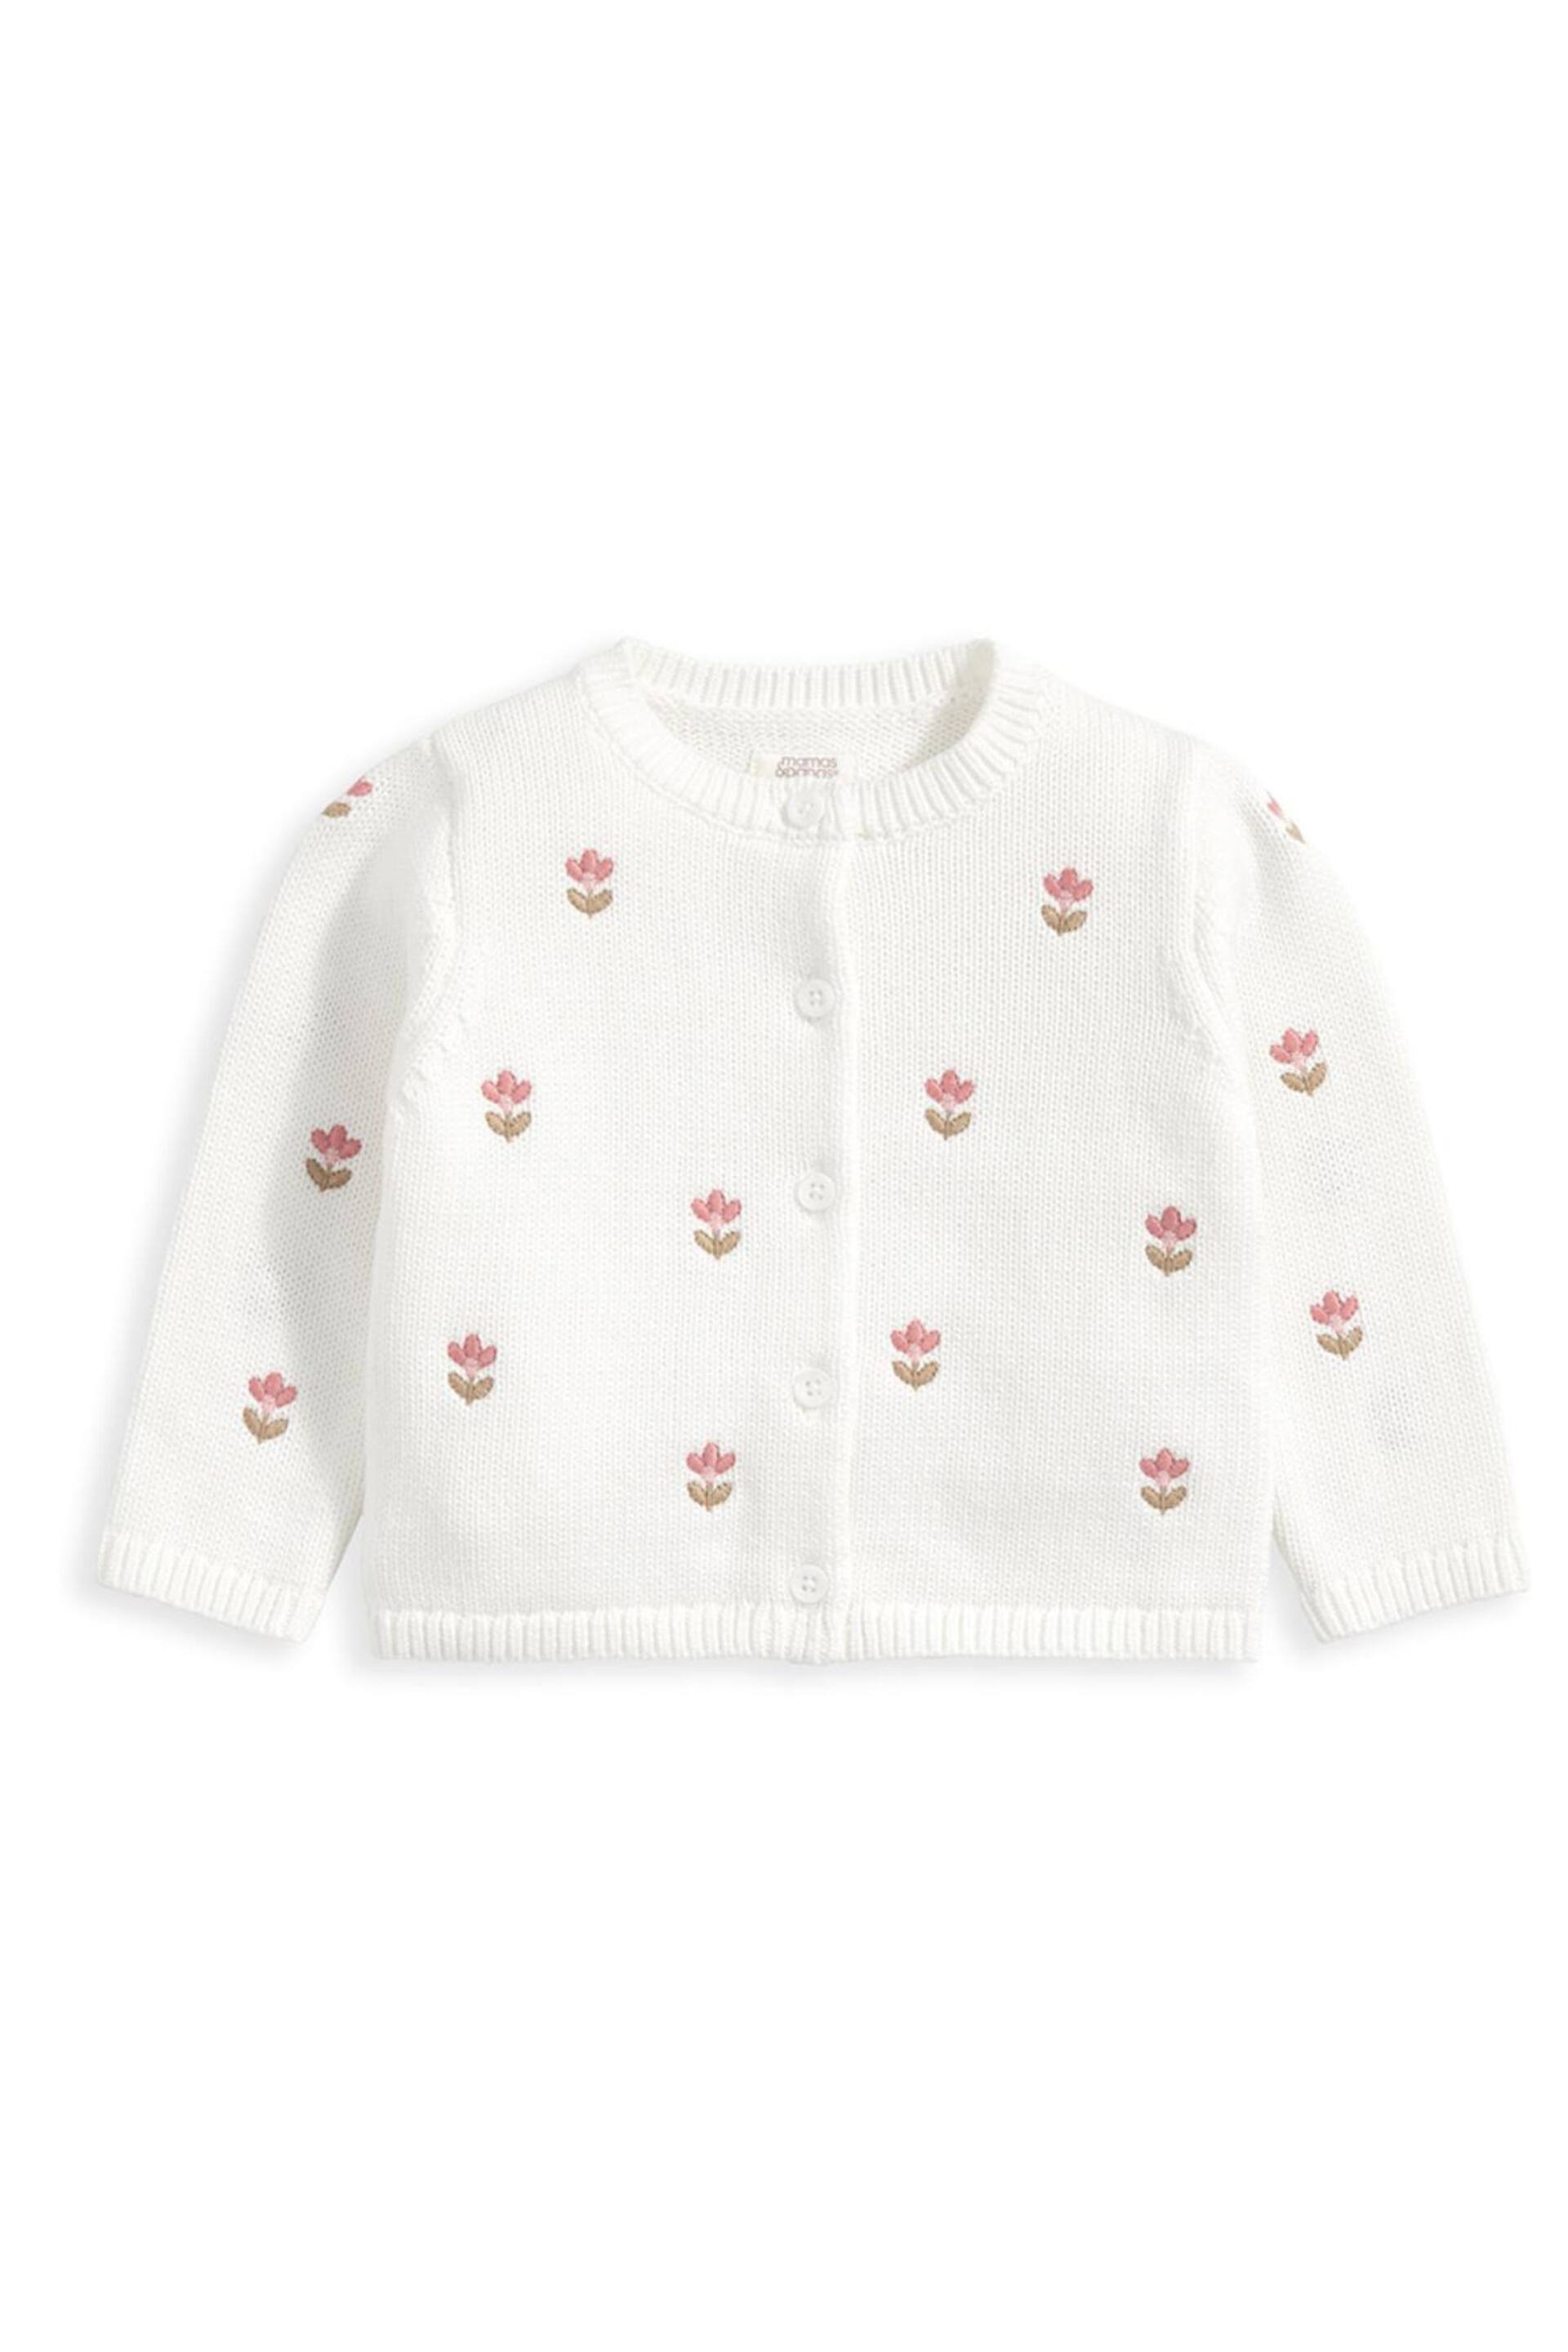 Mamas & Papas White Embroidered Knit Cardigan - Image 2 of 4